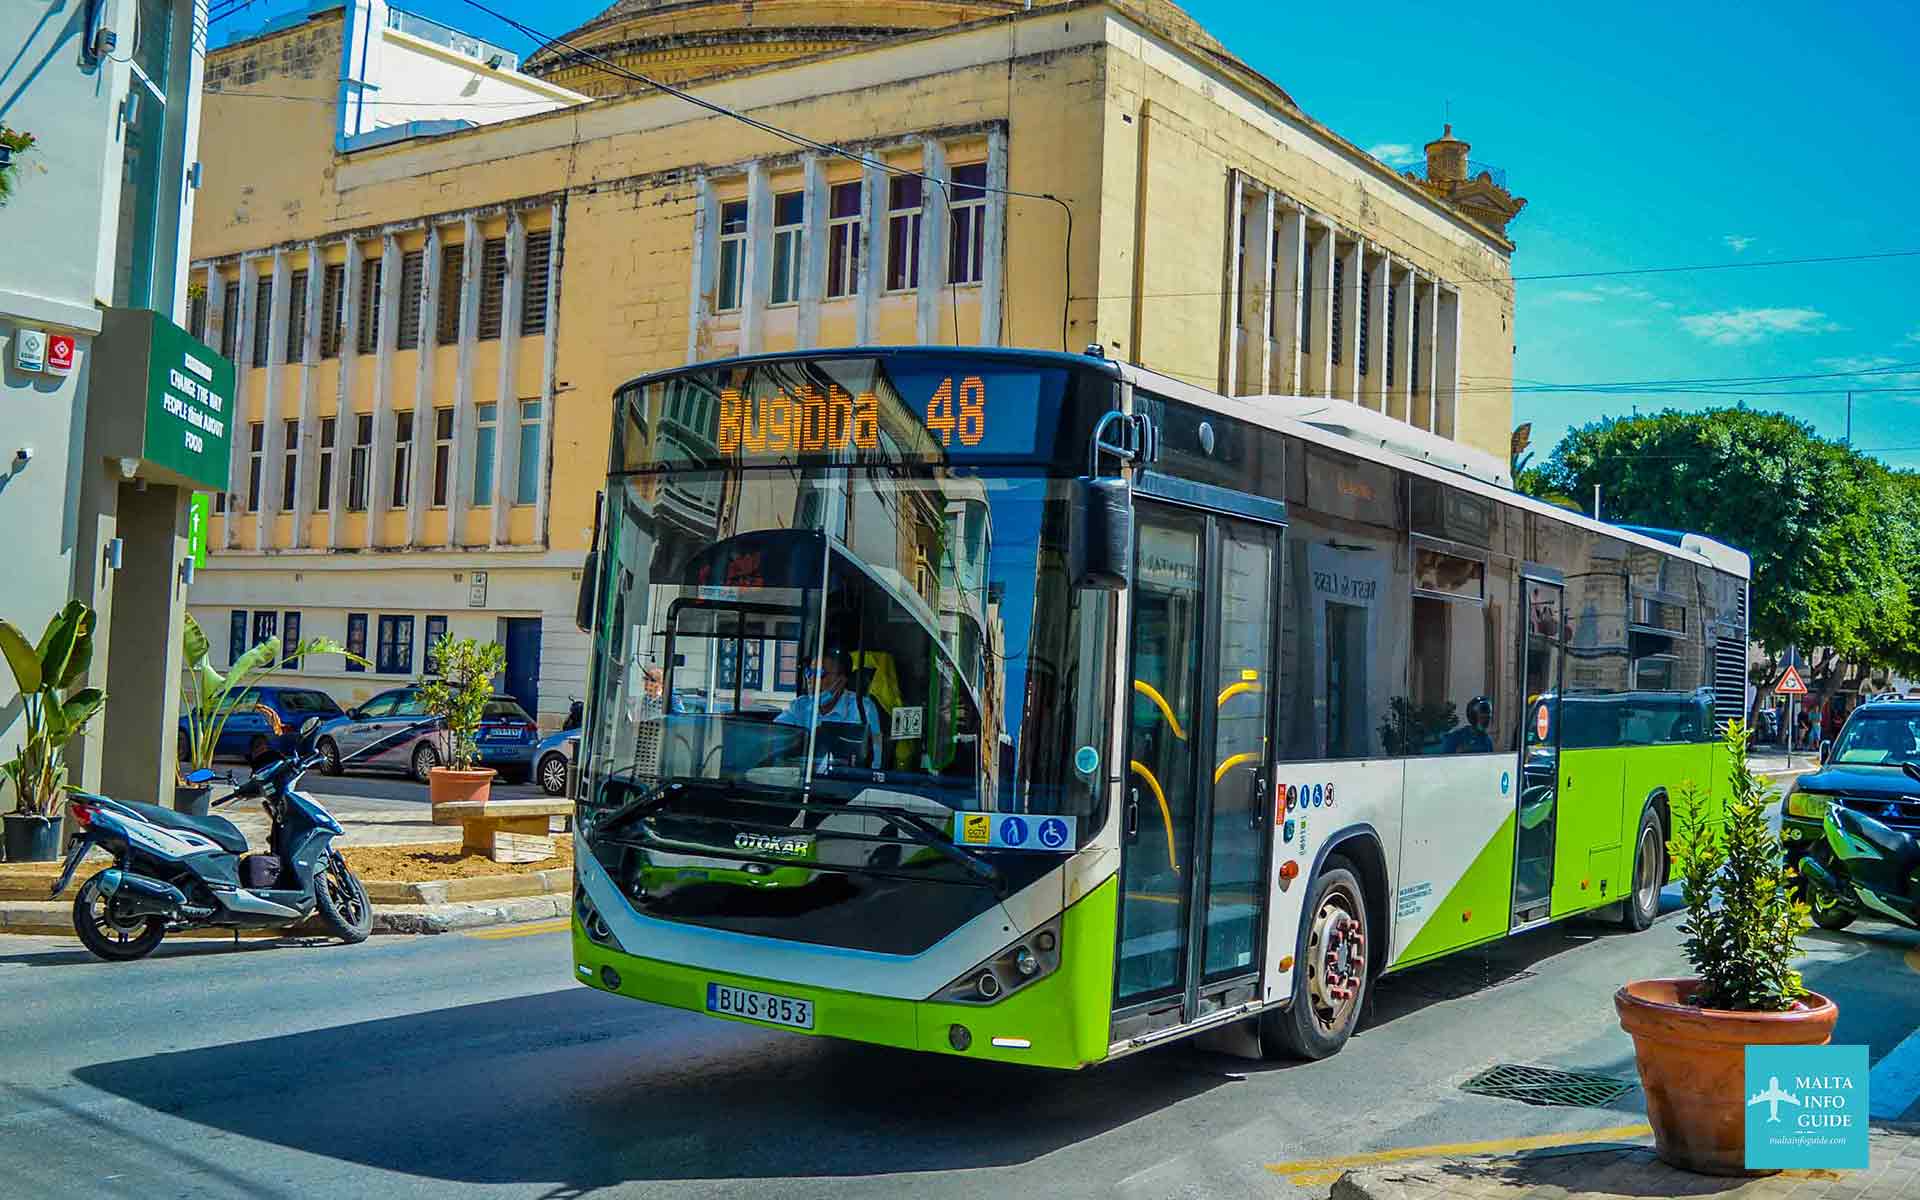 A bus passing through Mosta street.